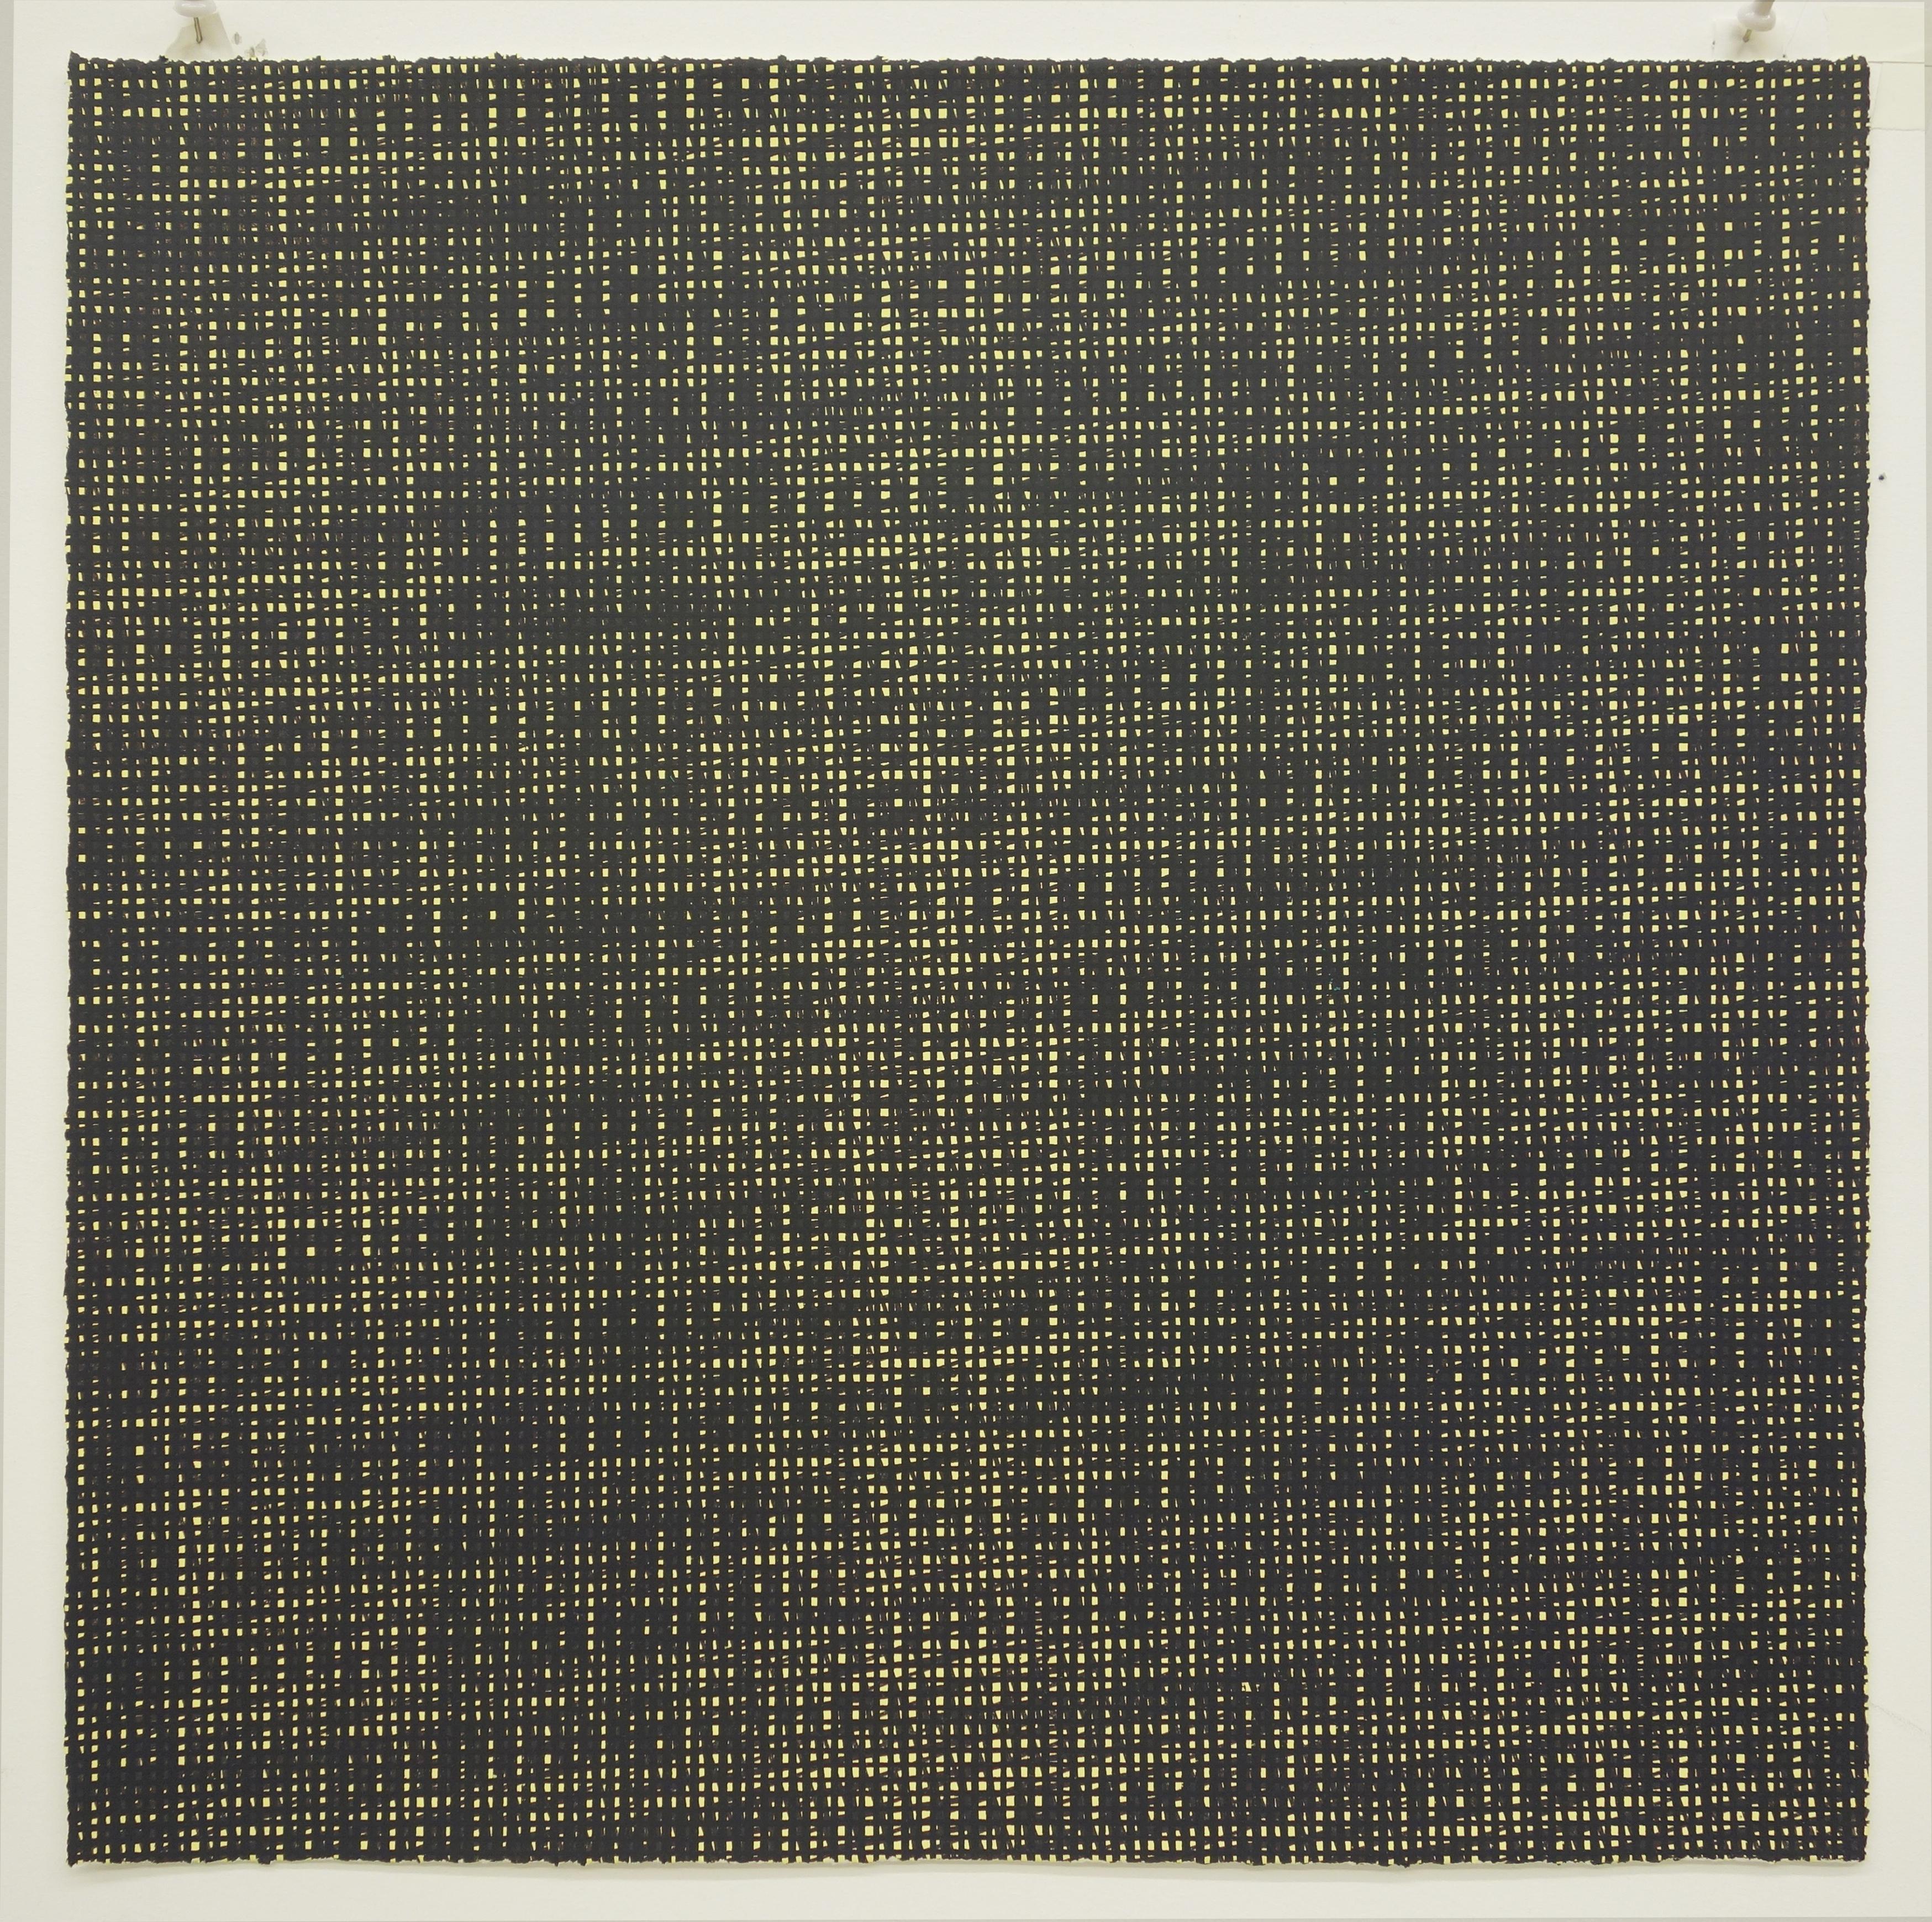 Rob de Oude, Untitled-Wassaic 1, 2016, silkscreen, 18 x 18 inches, Suite of 10 6